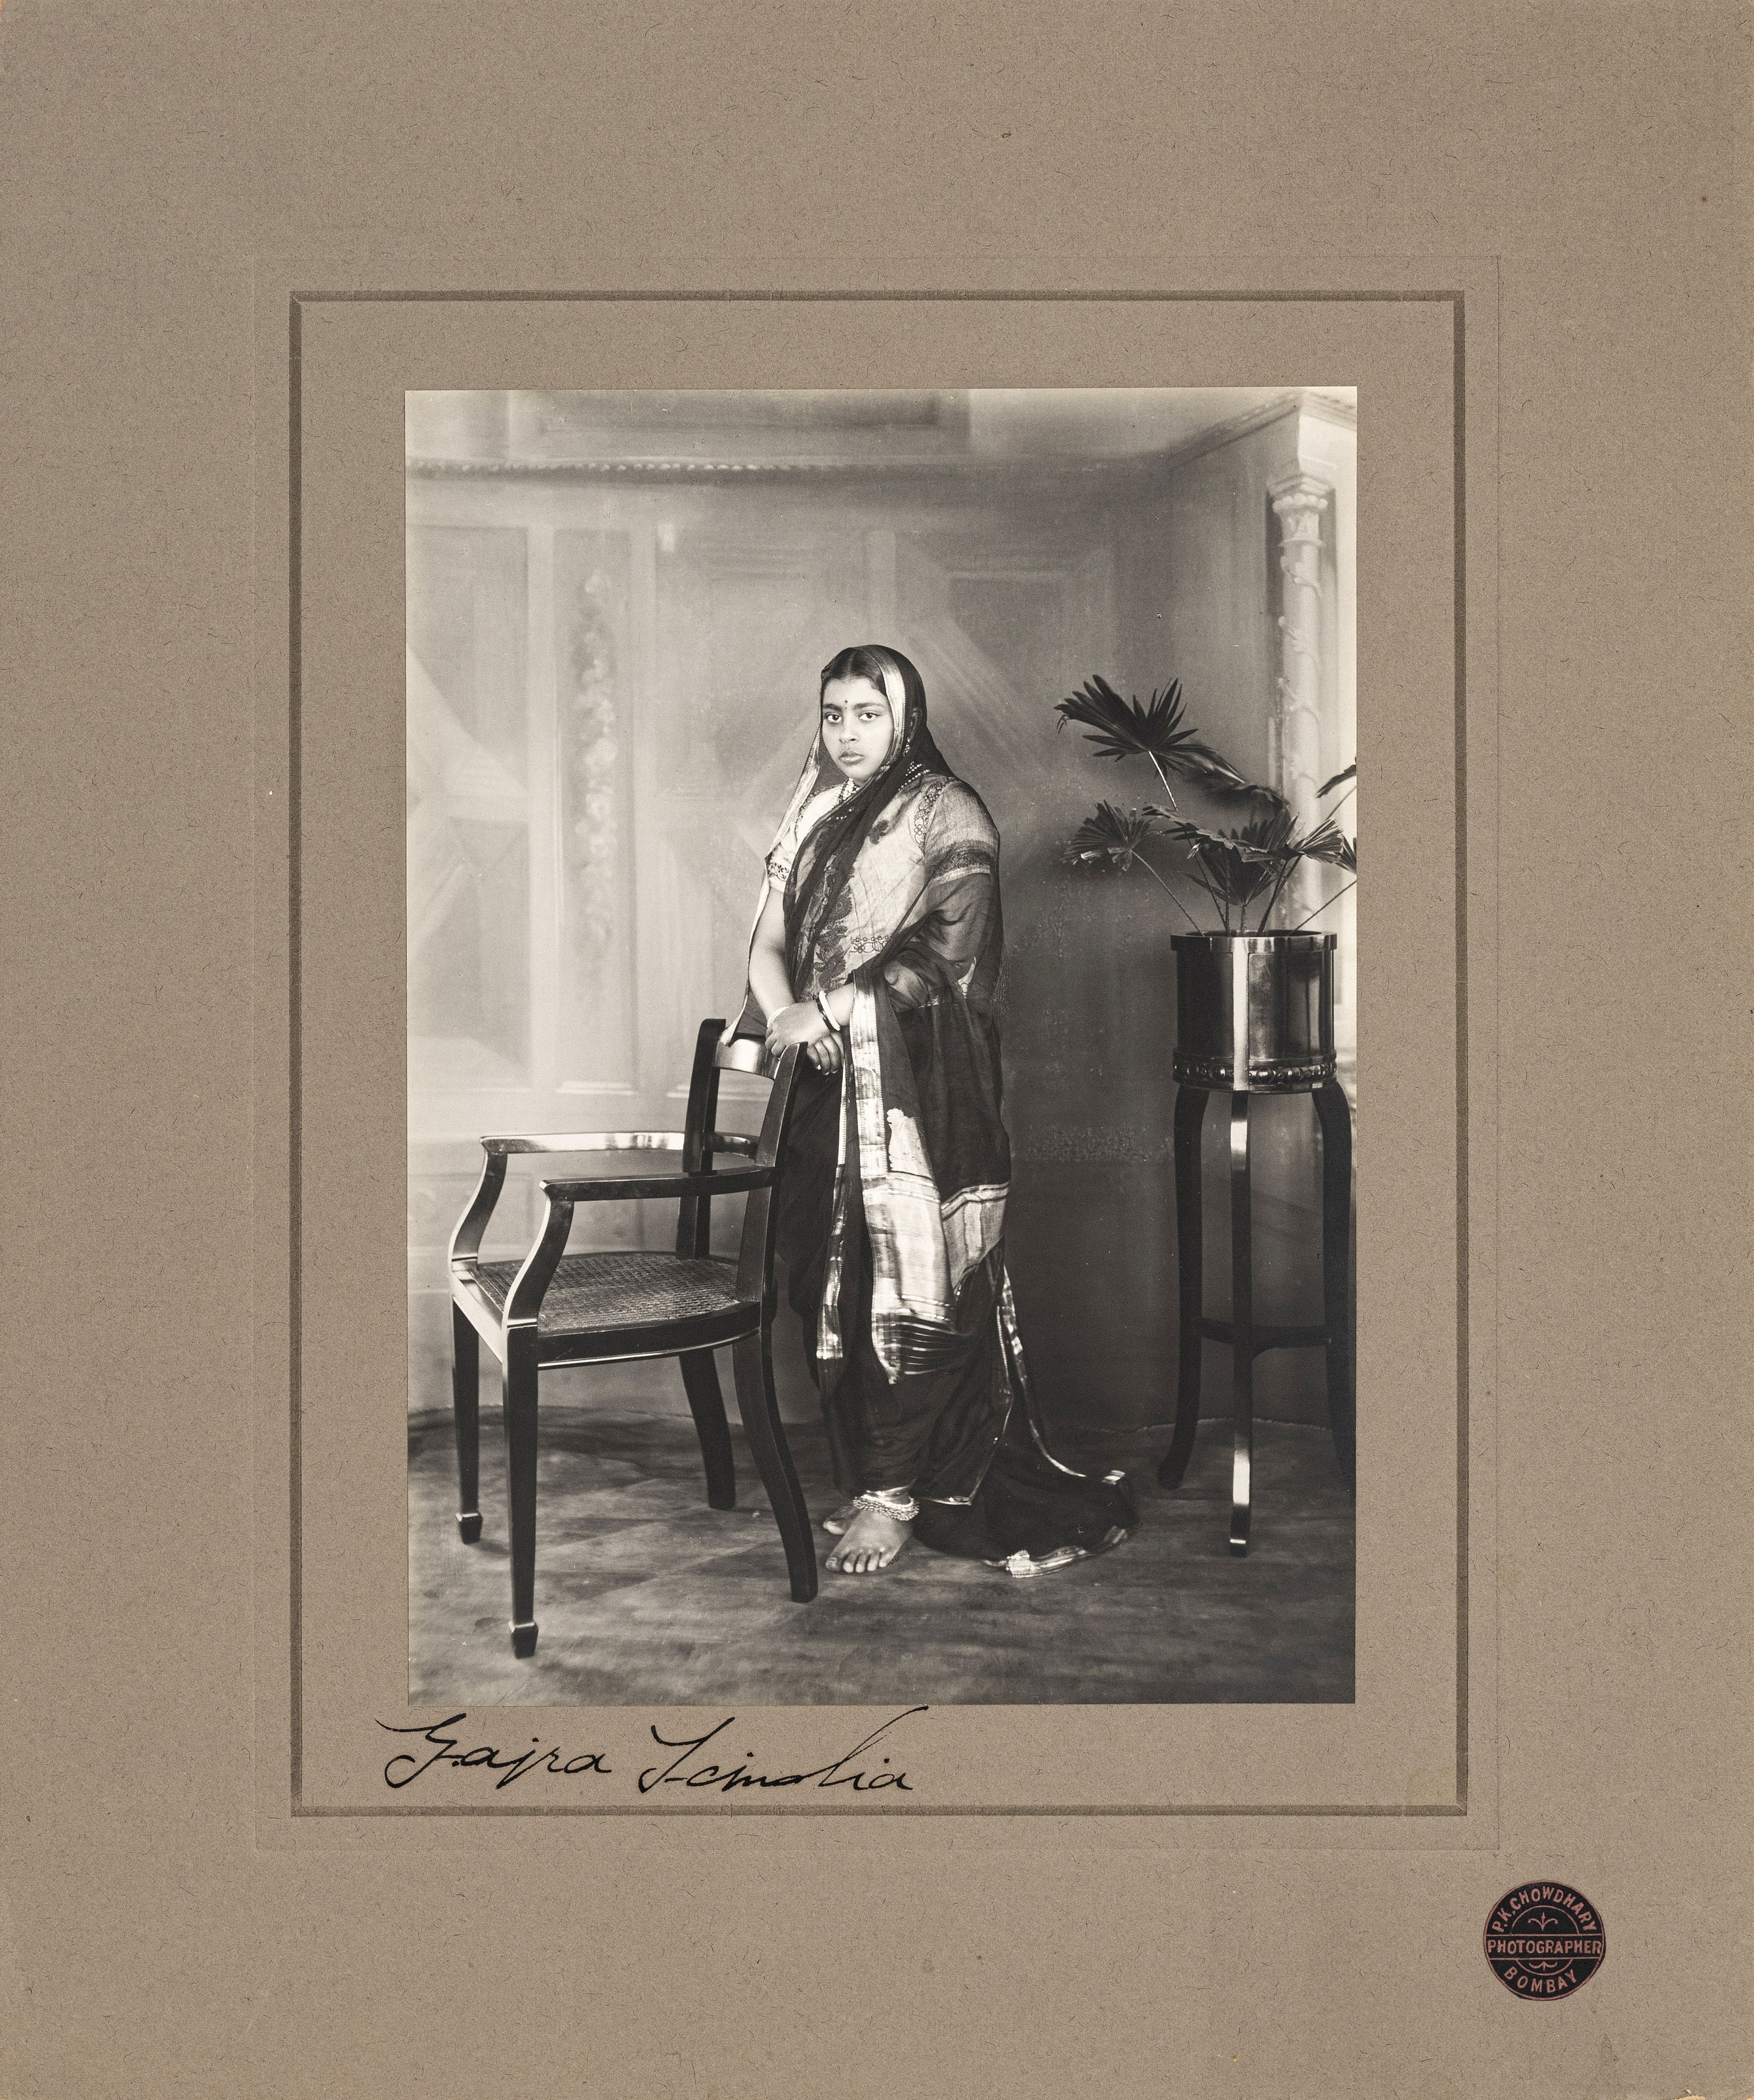 Portraits and group photographs depicting the Maharaja or a Maharani of Gwalior